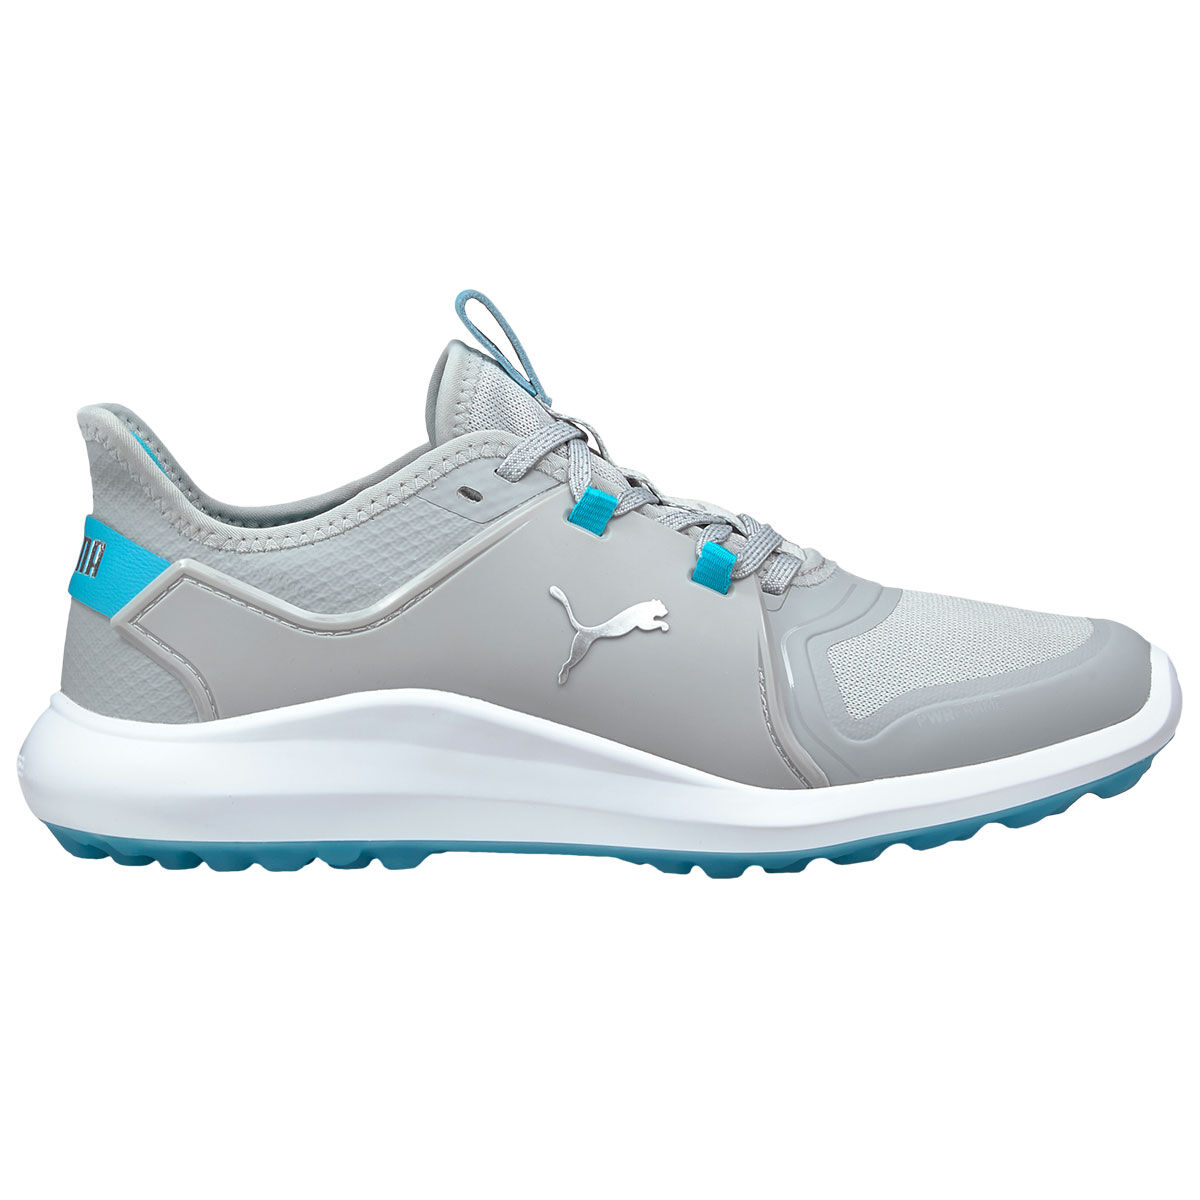 Chaussures PUMA Golf IGNITE FASTEN8 pour femmes, femme, 4, High rise/silver/scuba blue, Normal | Onl